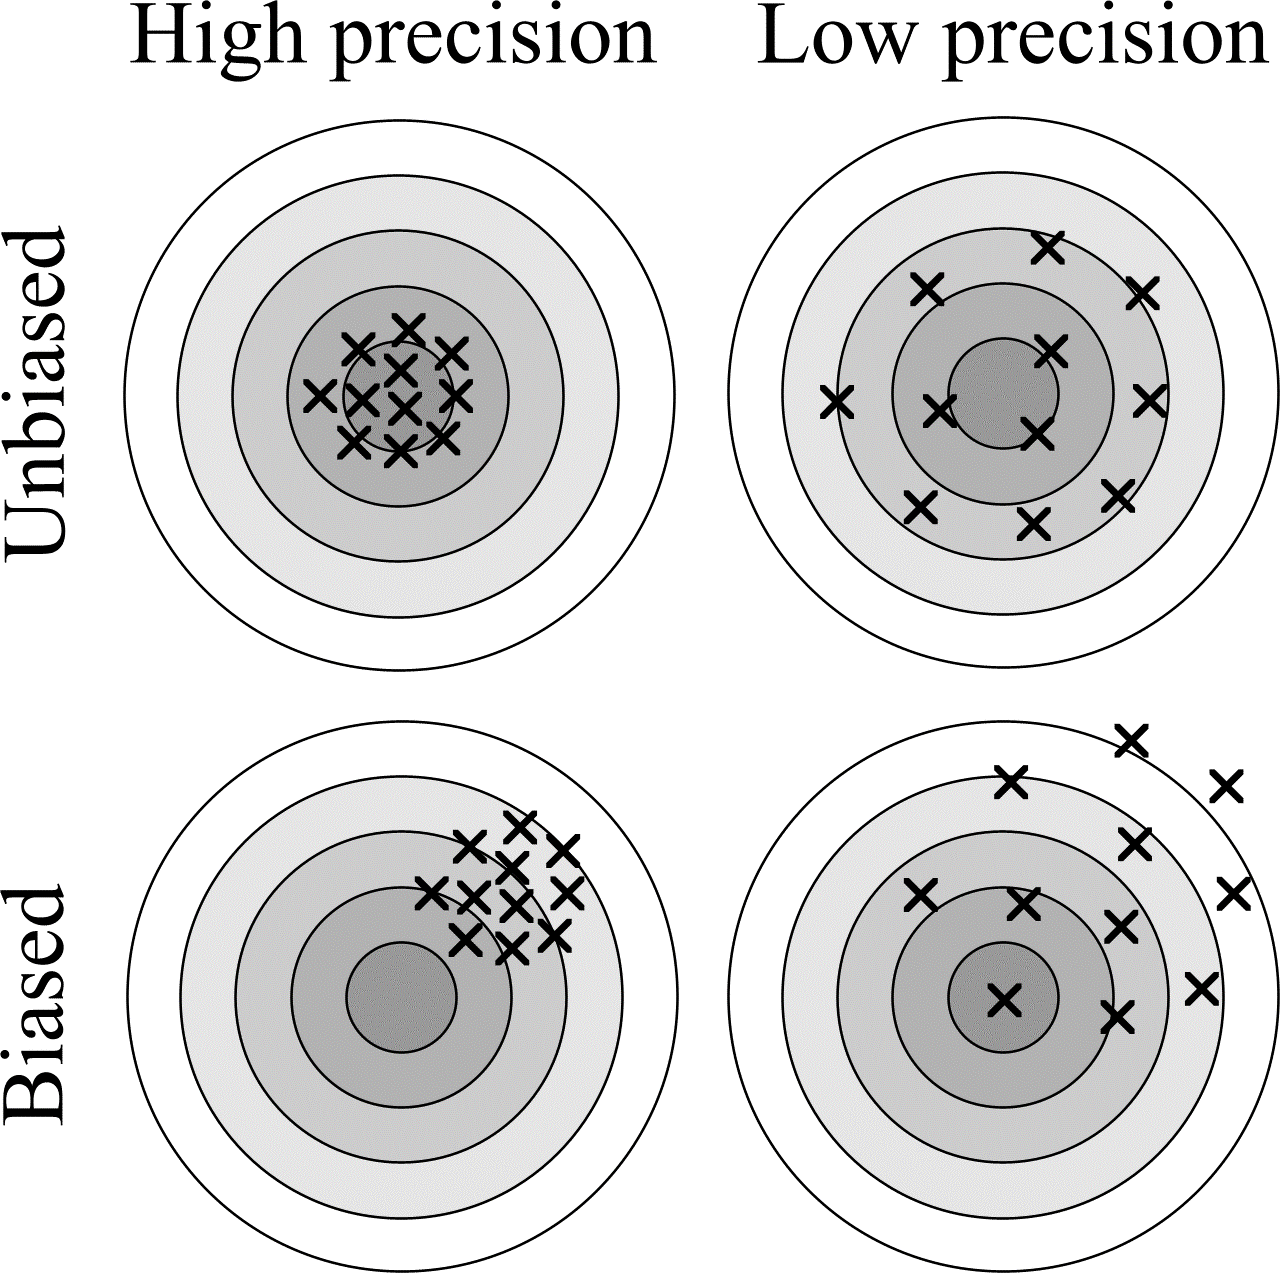 Illustration of bias and precision